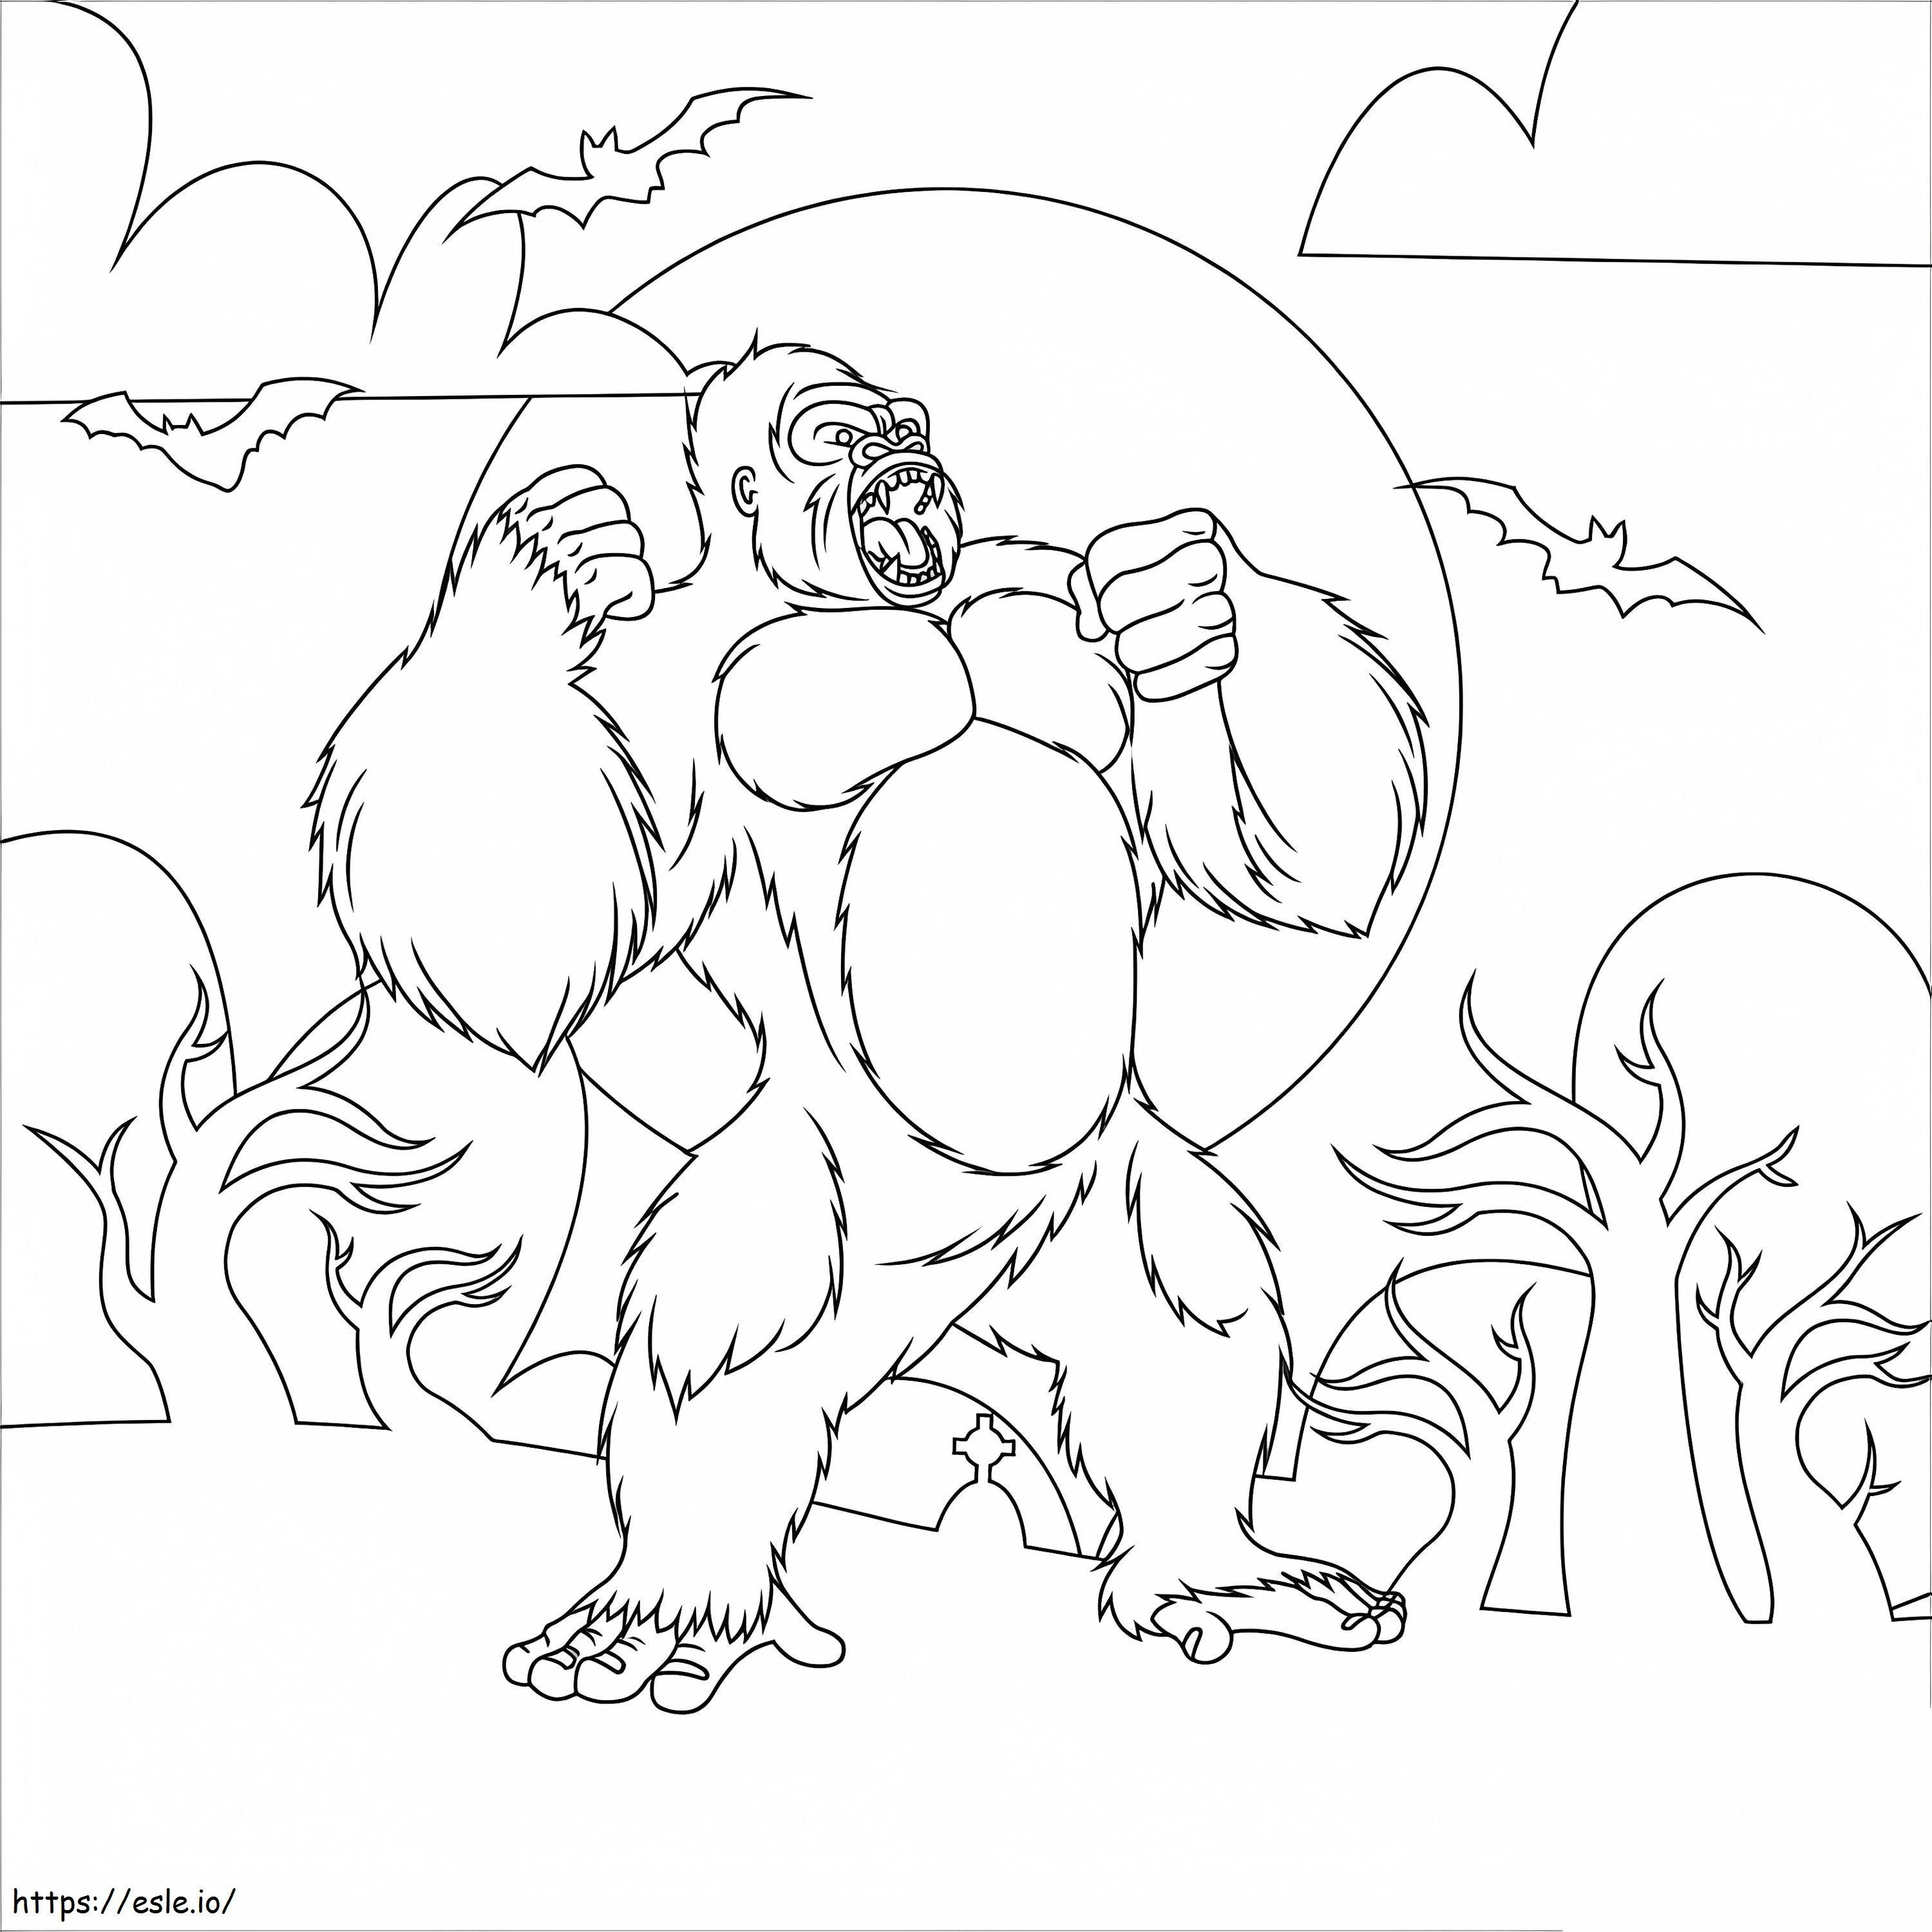 Angry King Kong 1 coloring page